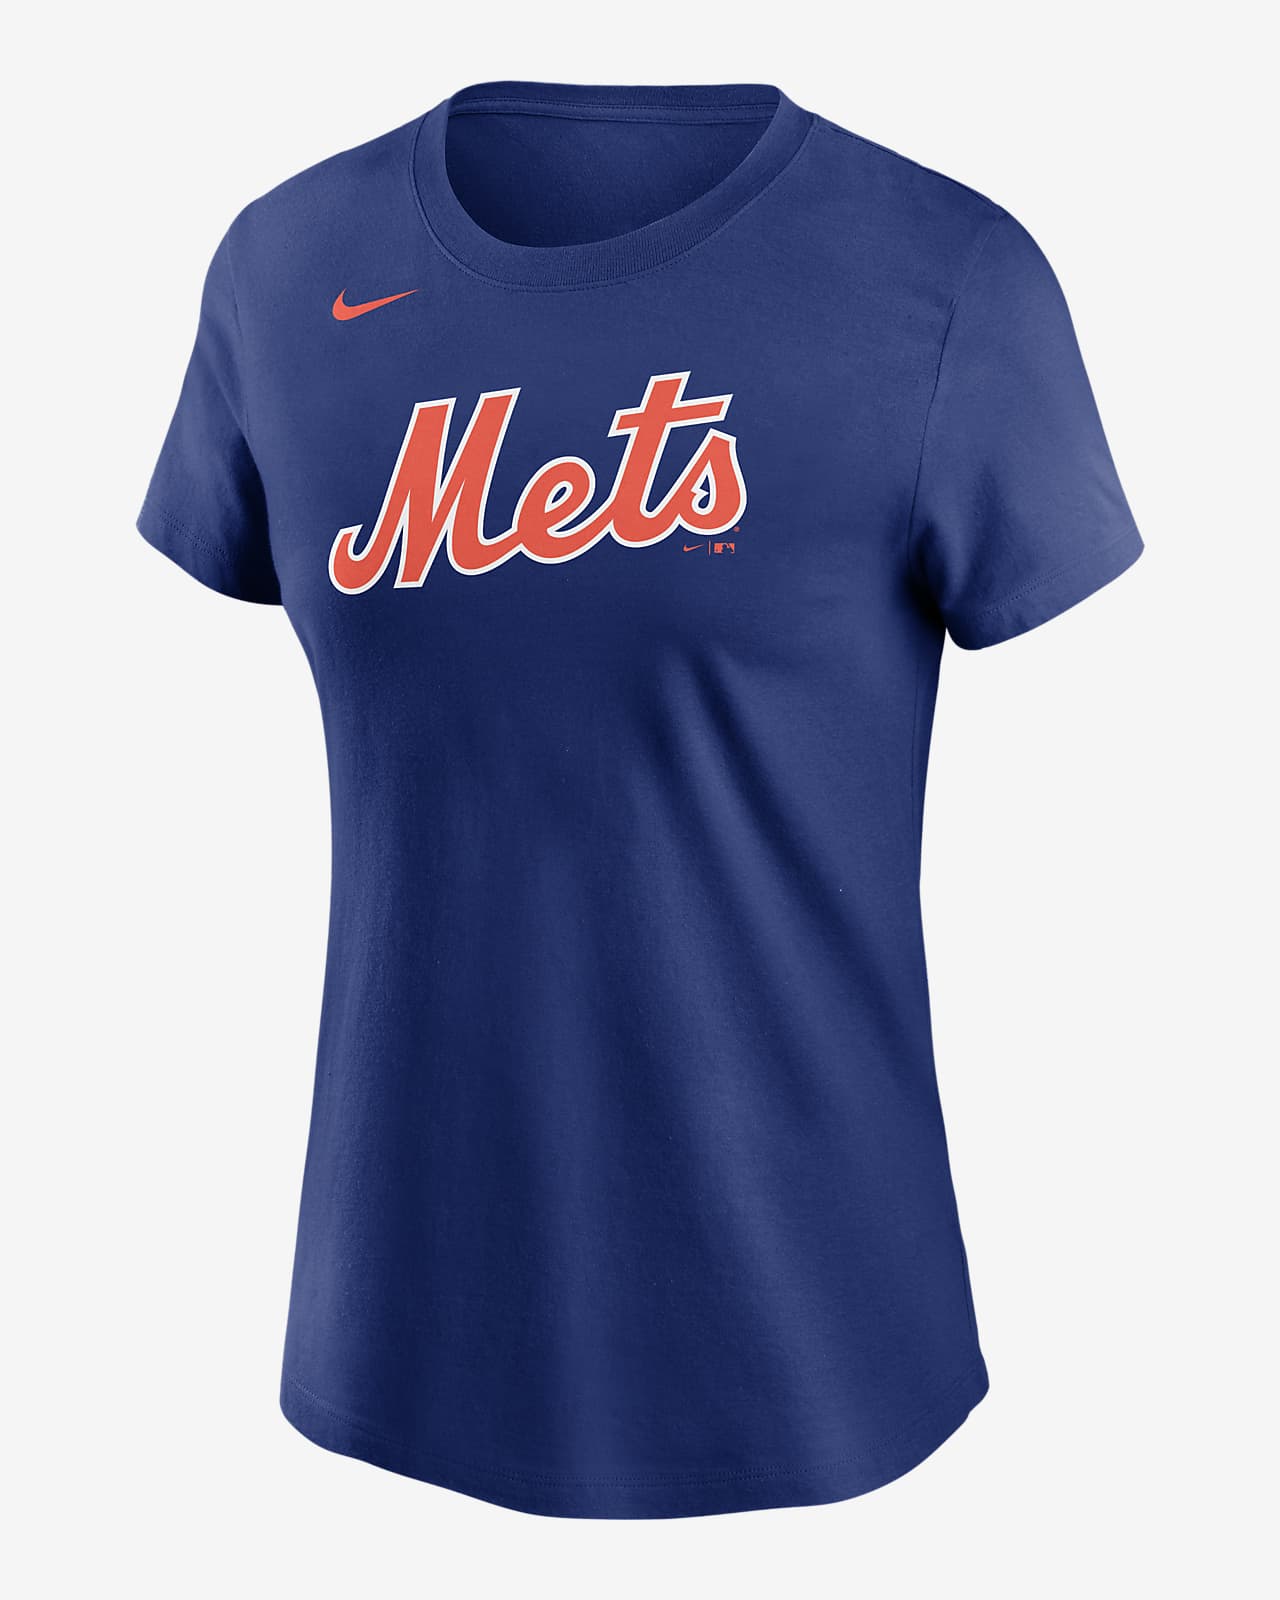 new york mets shirt